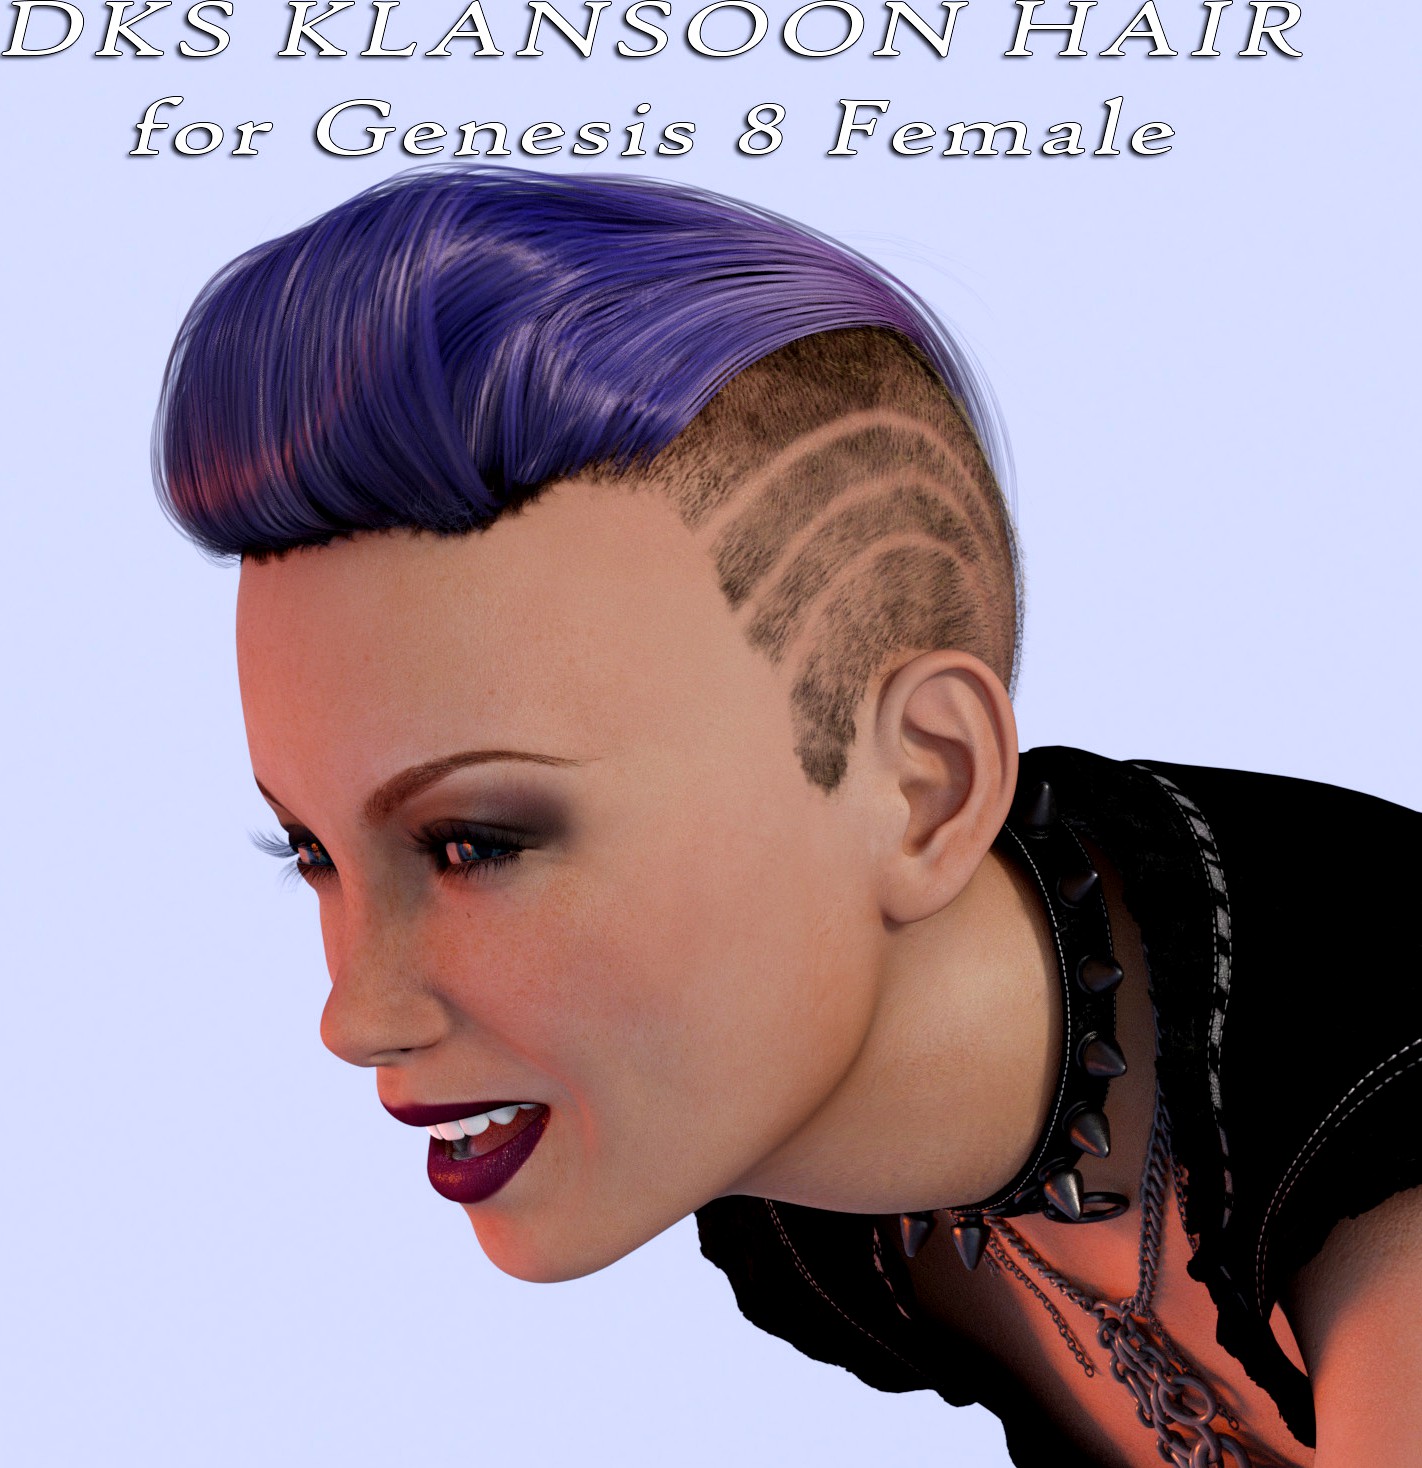 DKS Klansoon Hair for Genesis 8 Female